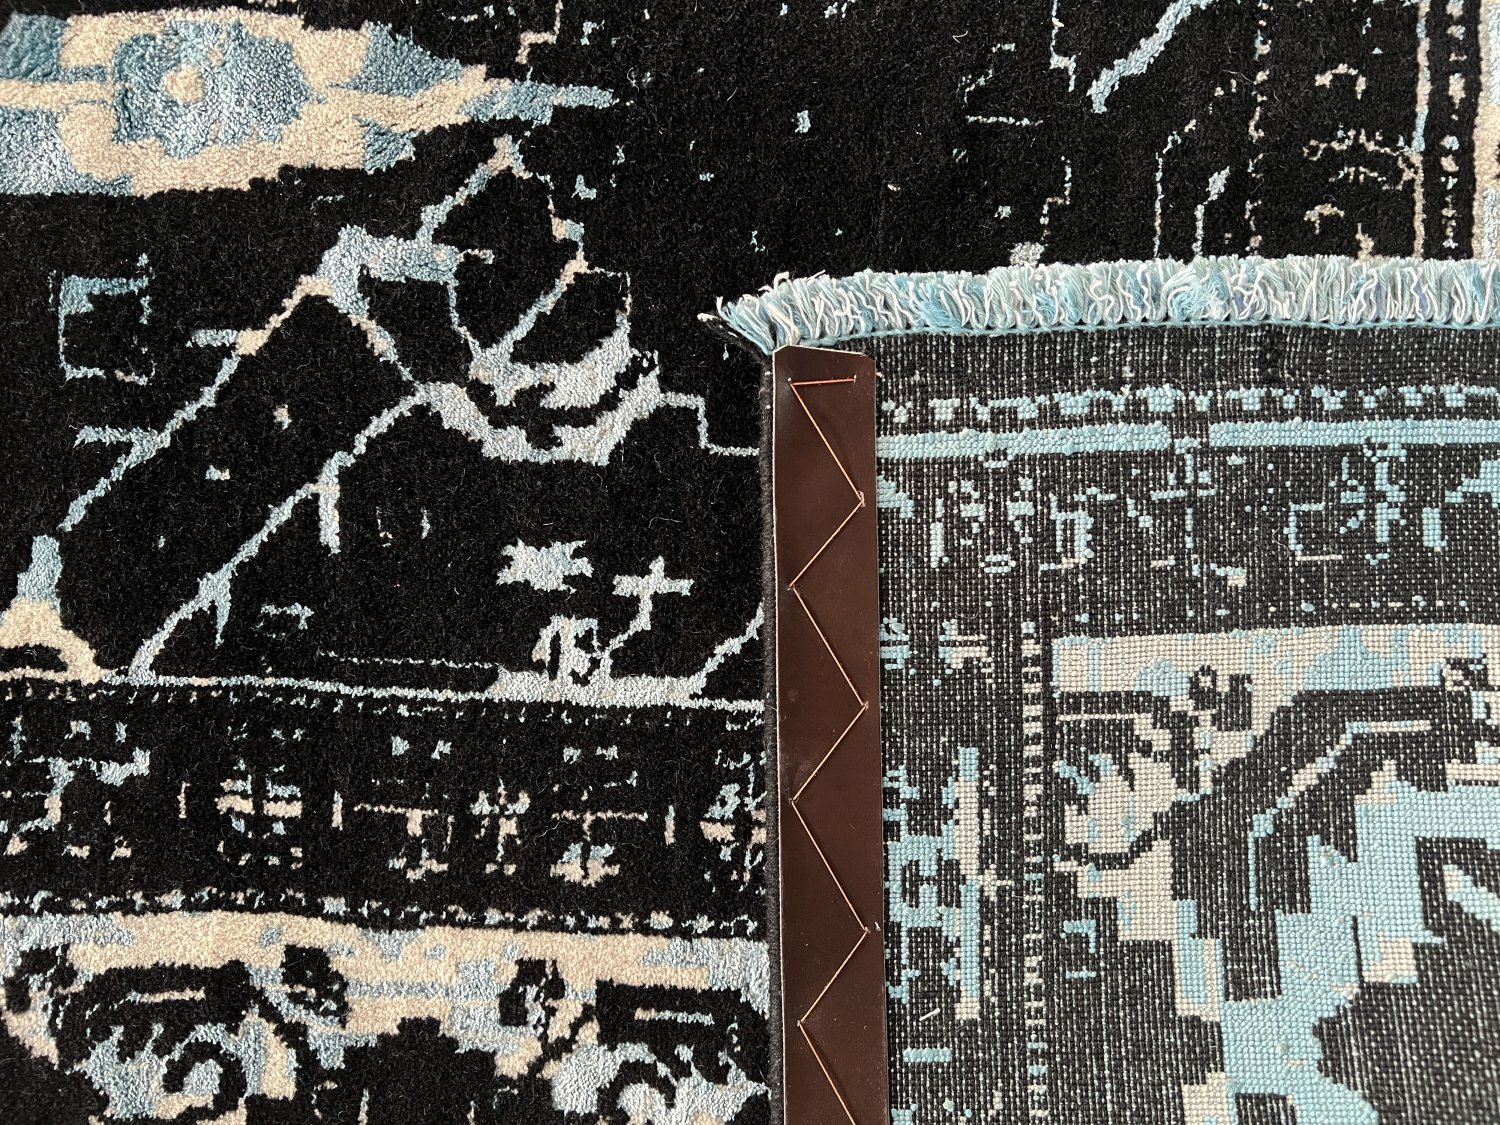 فرش پشمی ماشینی طبیعی و ارگانیک کد 1032a - زمینه مشکی - حاشیه مشکی